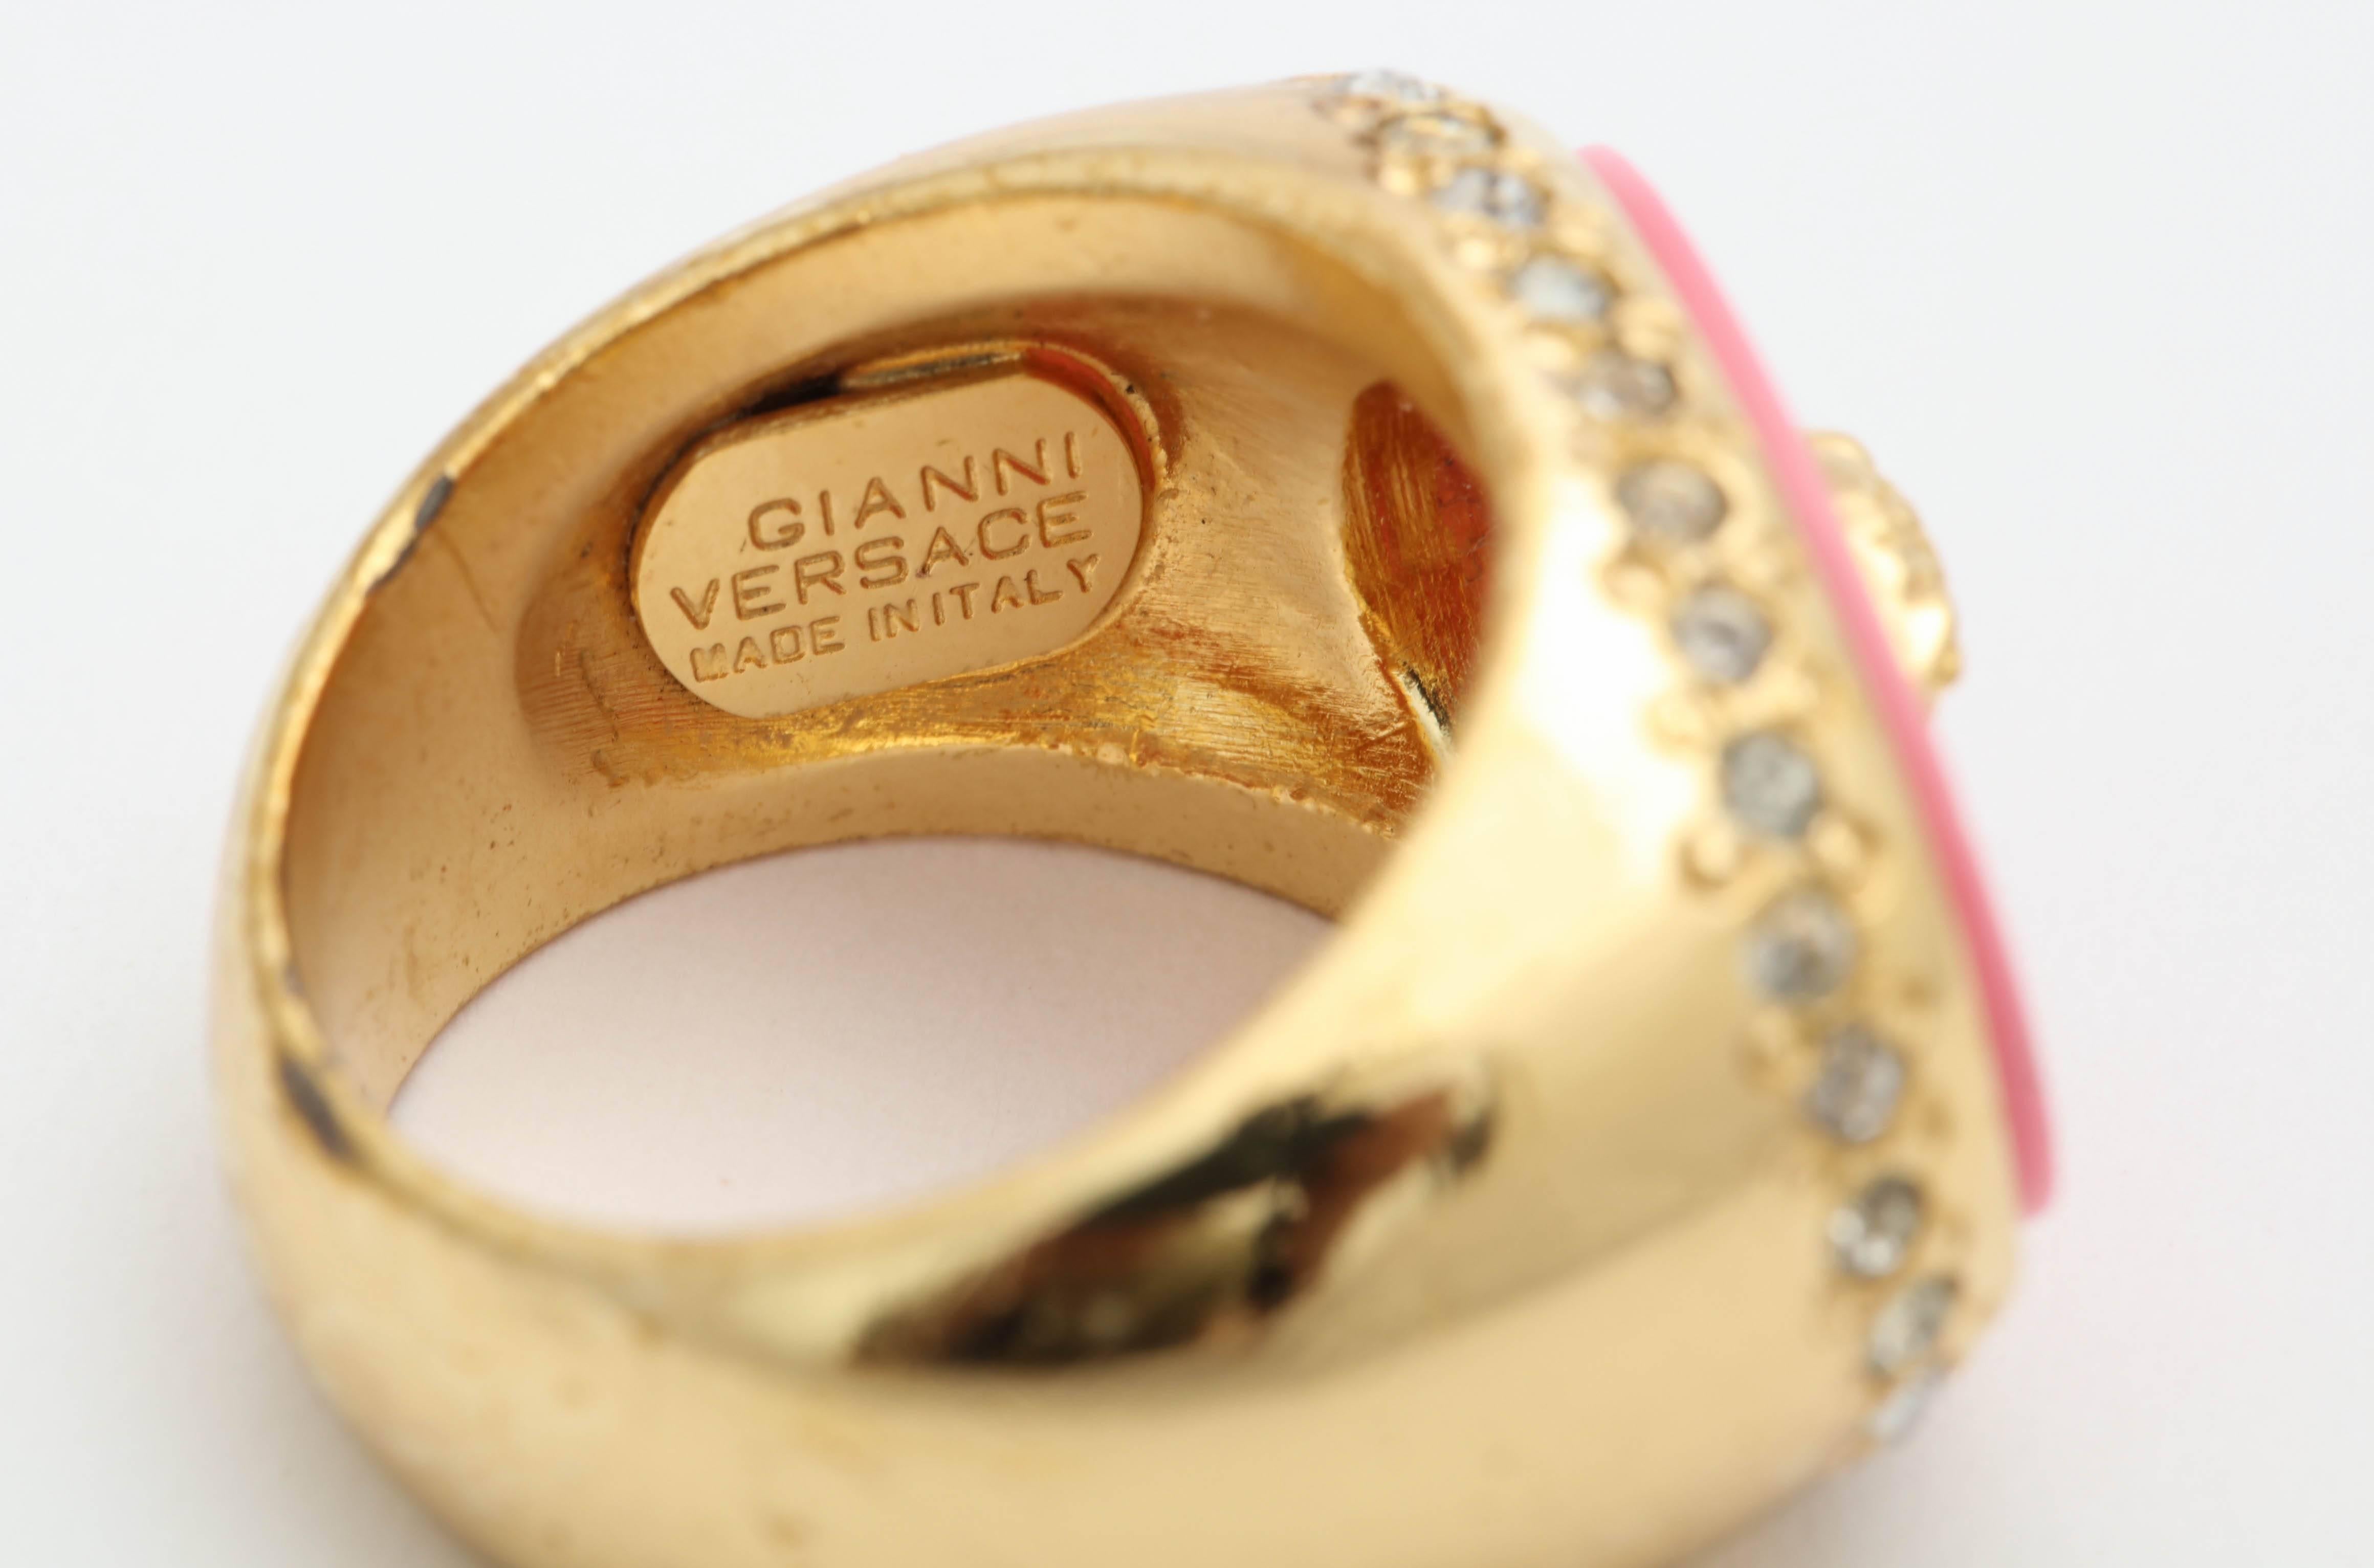 Gianni Versace Iconic Pink Medusa Ring  1